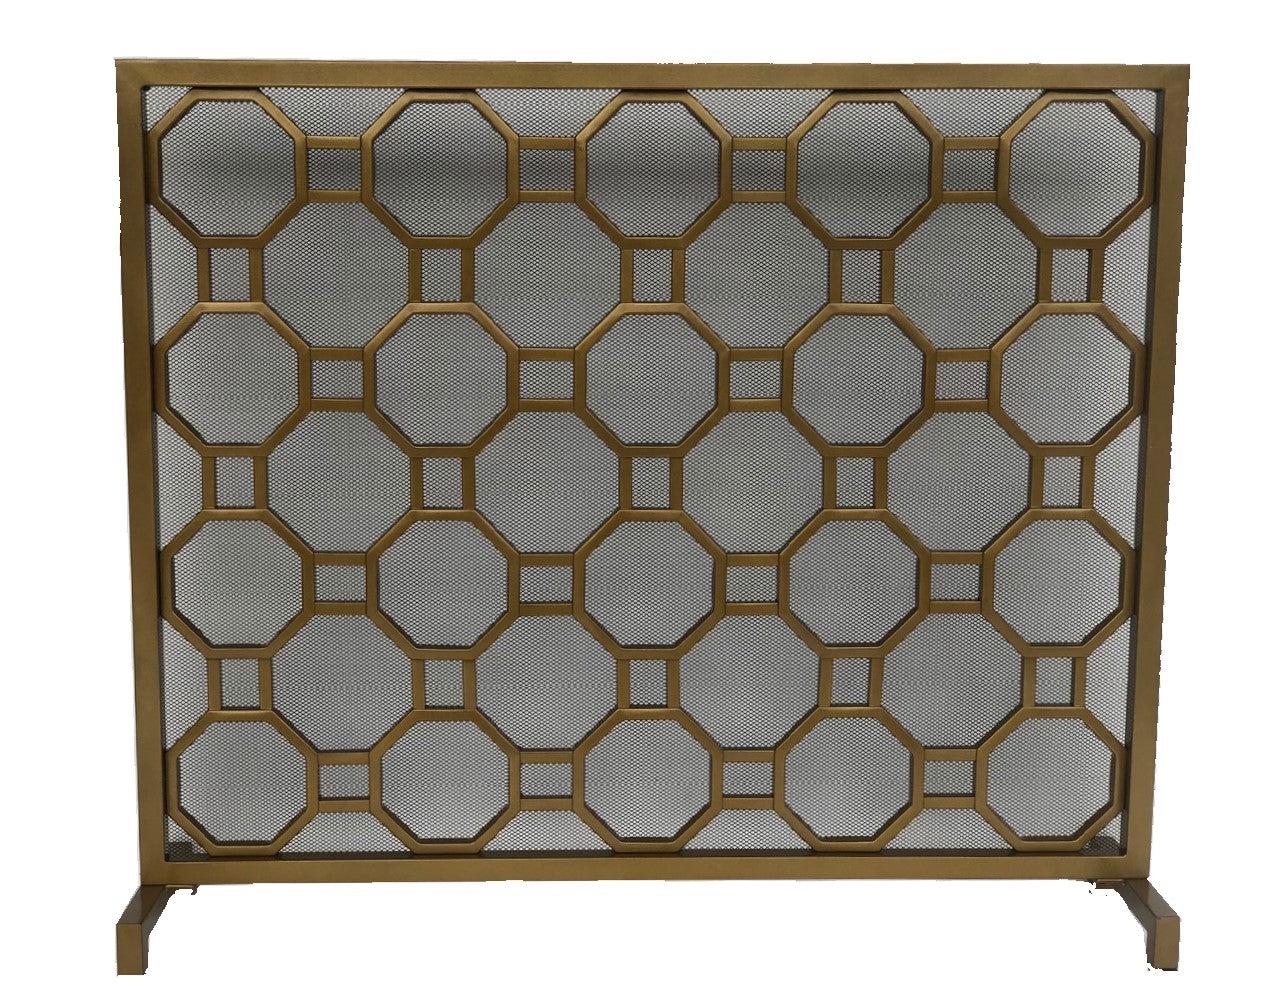 Dagan Industries 40" x 34" Electro Plated Gold Finish Circle Pattern Design Fireplace Screen